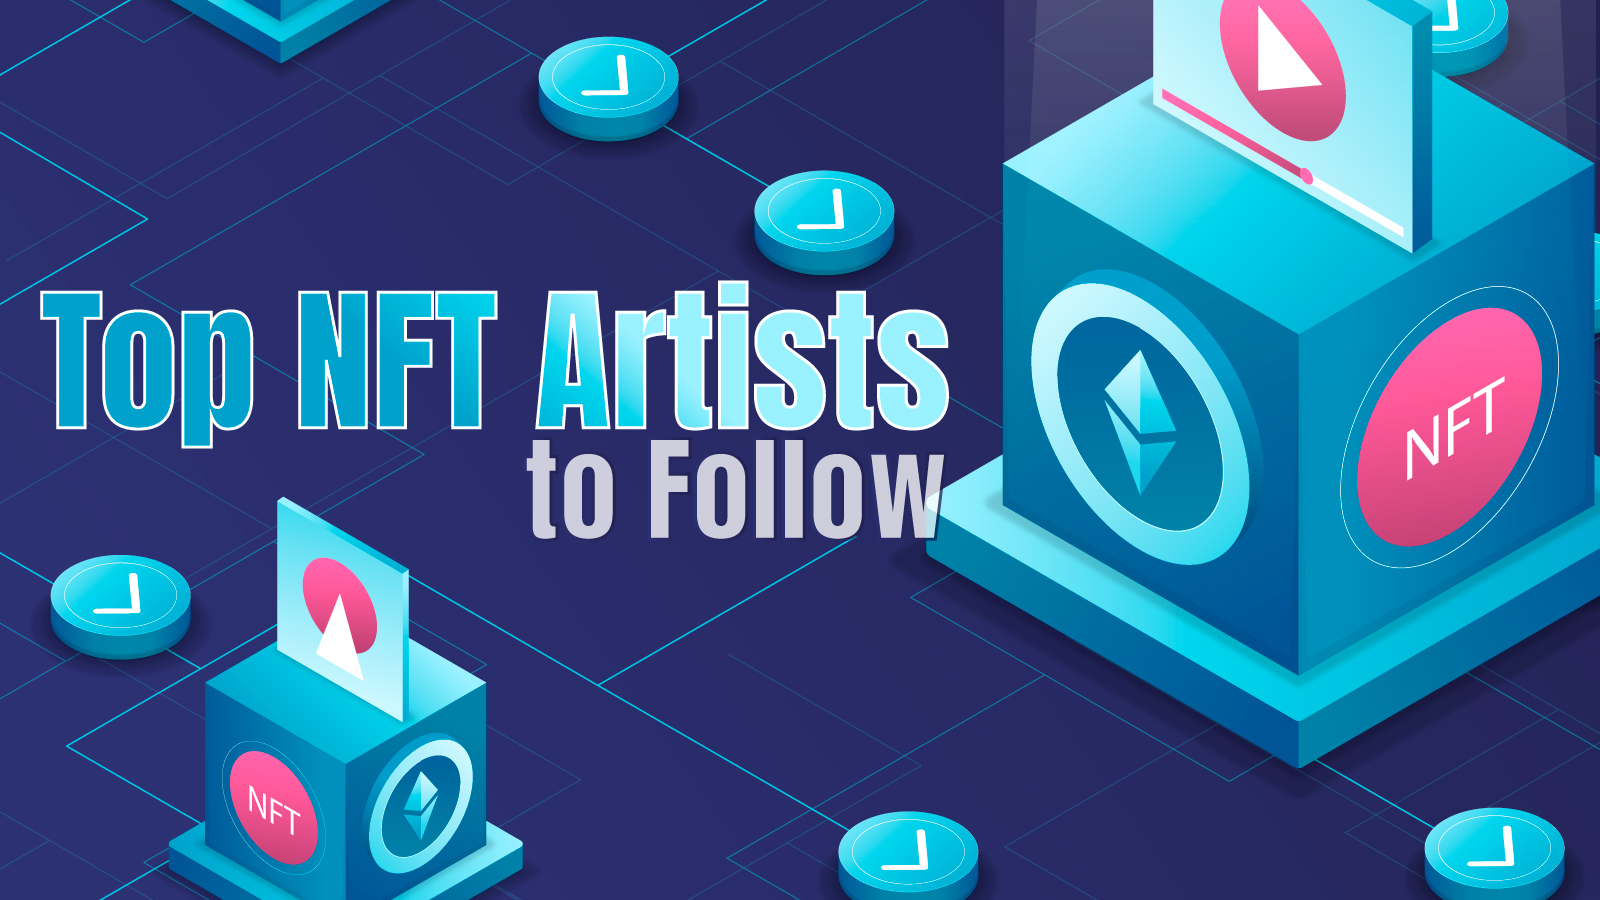 Top 7 NFT artists to follow (plus NFT crypto loan bonus content)